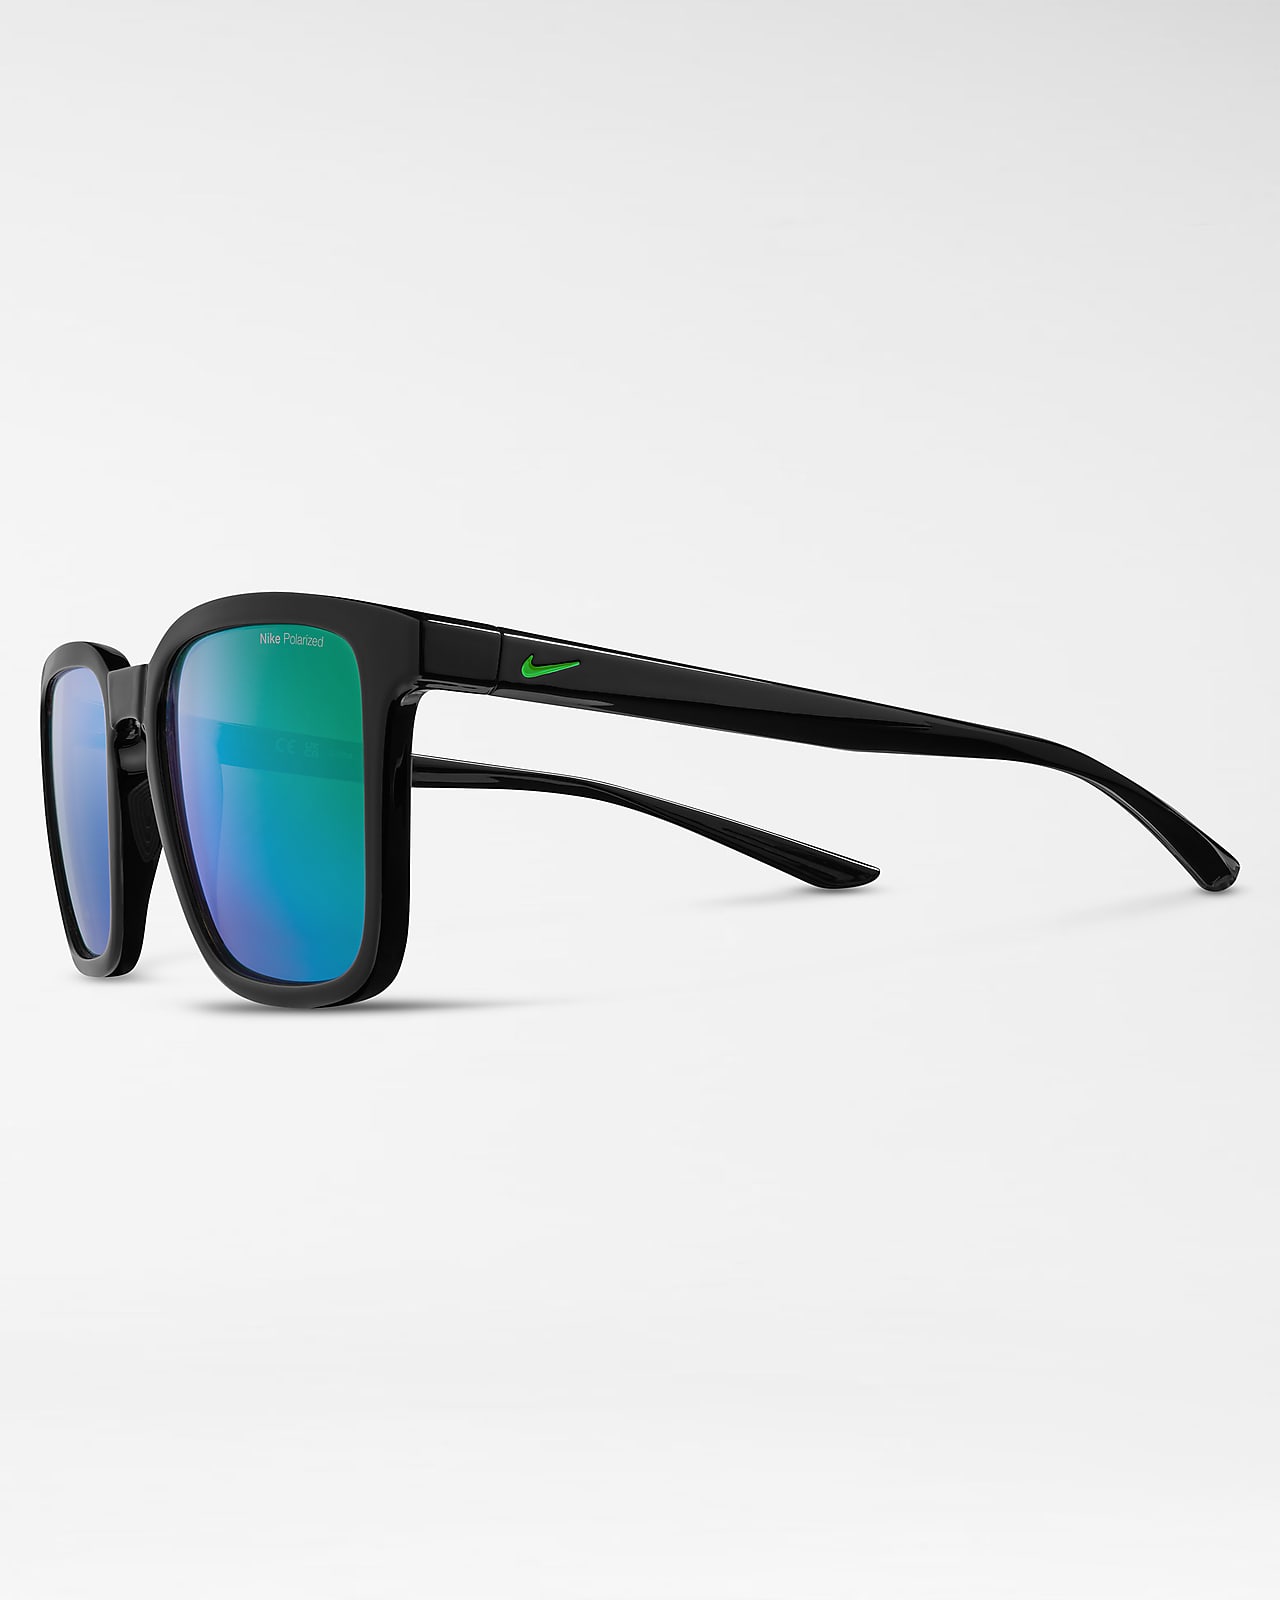 Nike Circuit Polarized Sunglasses.